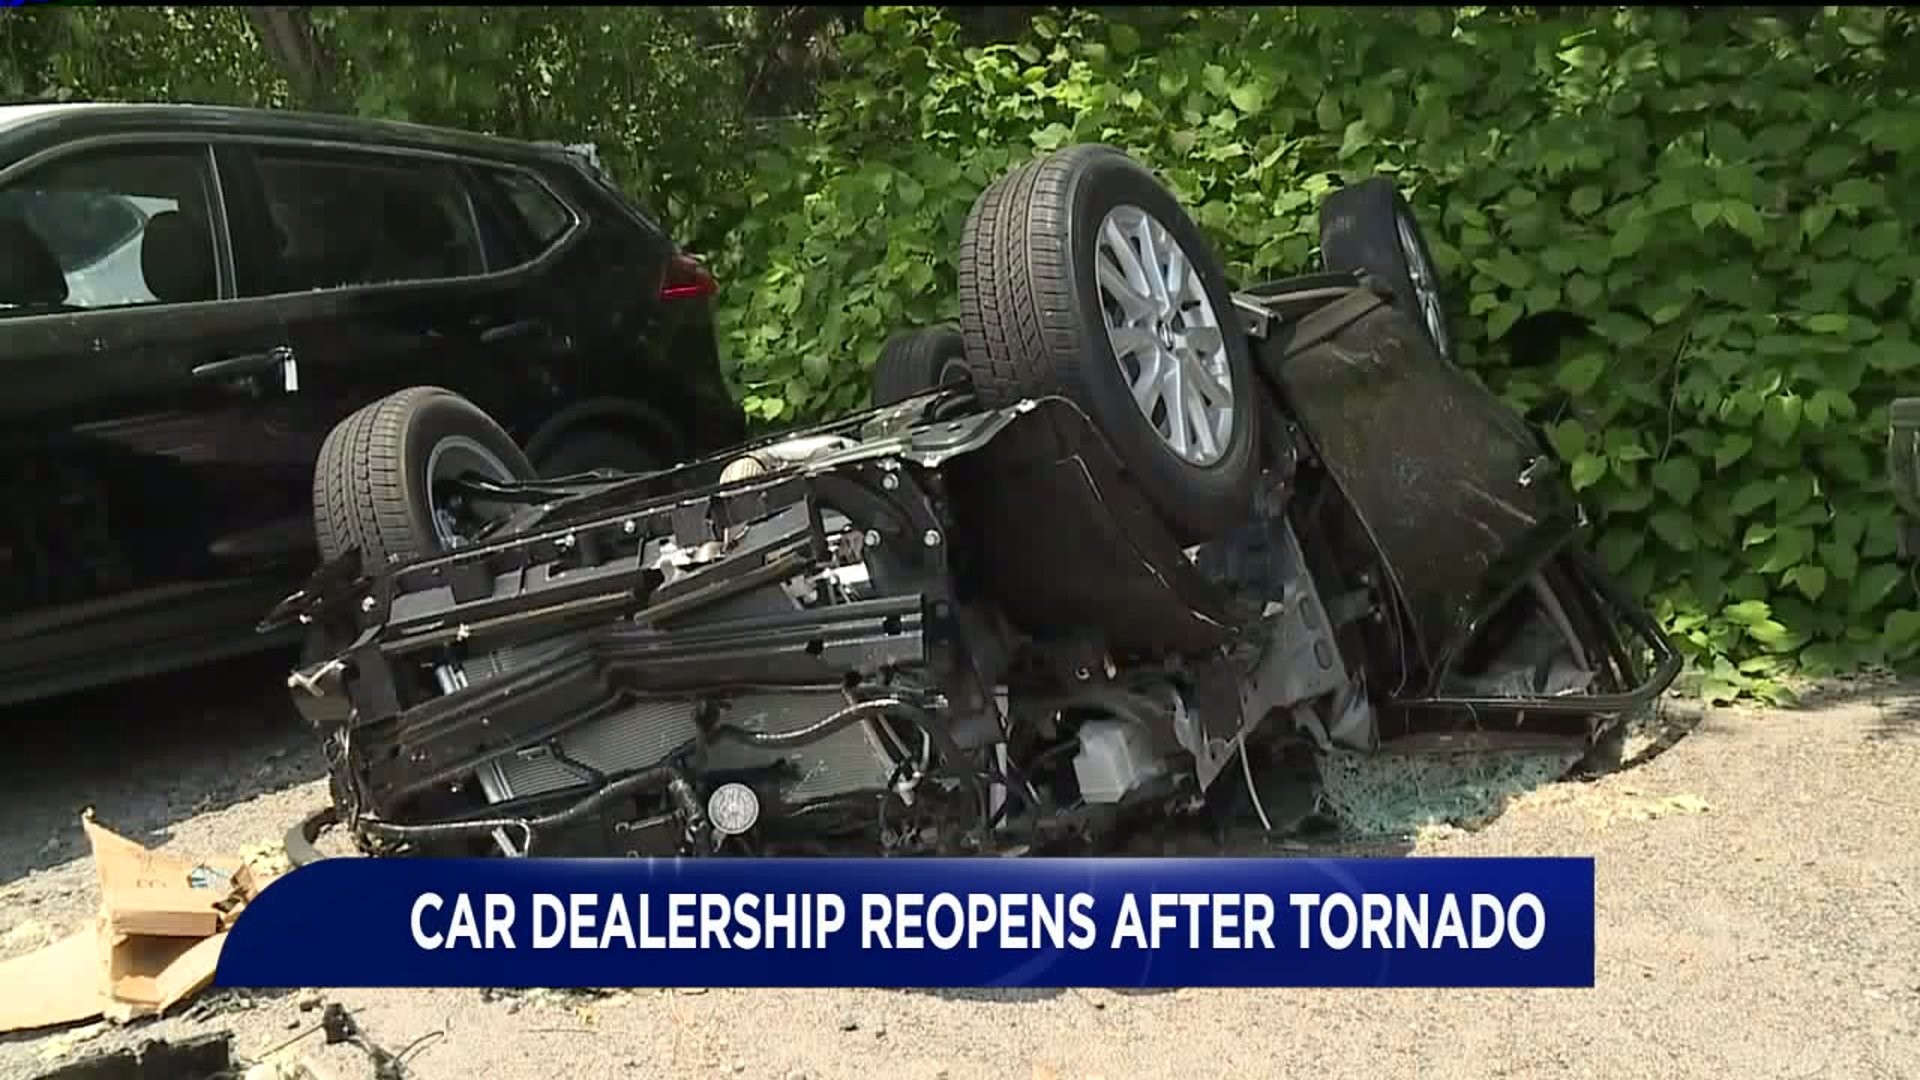 Nissan Dealership Reopens After Tornado Flipped Cars, Shattered Windows